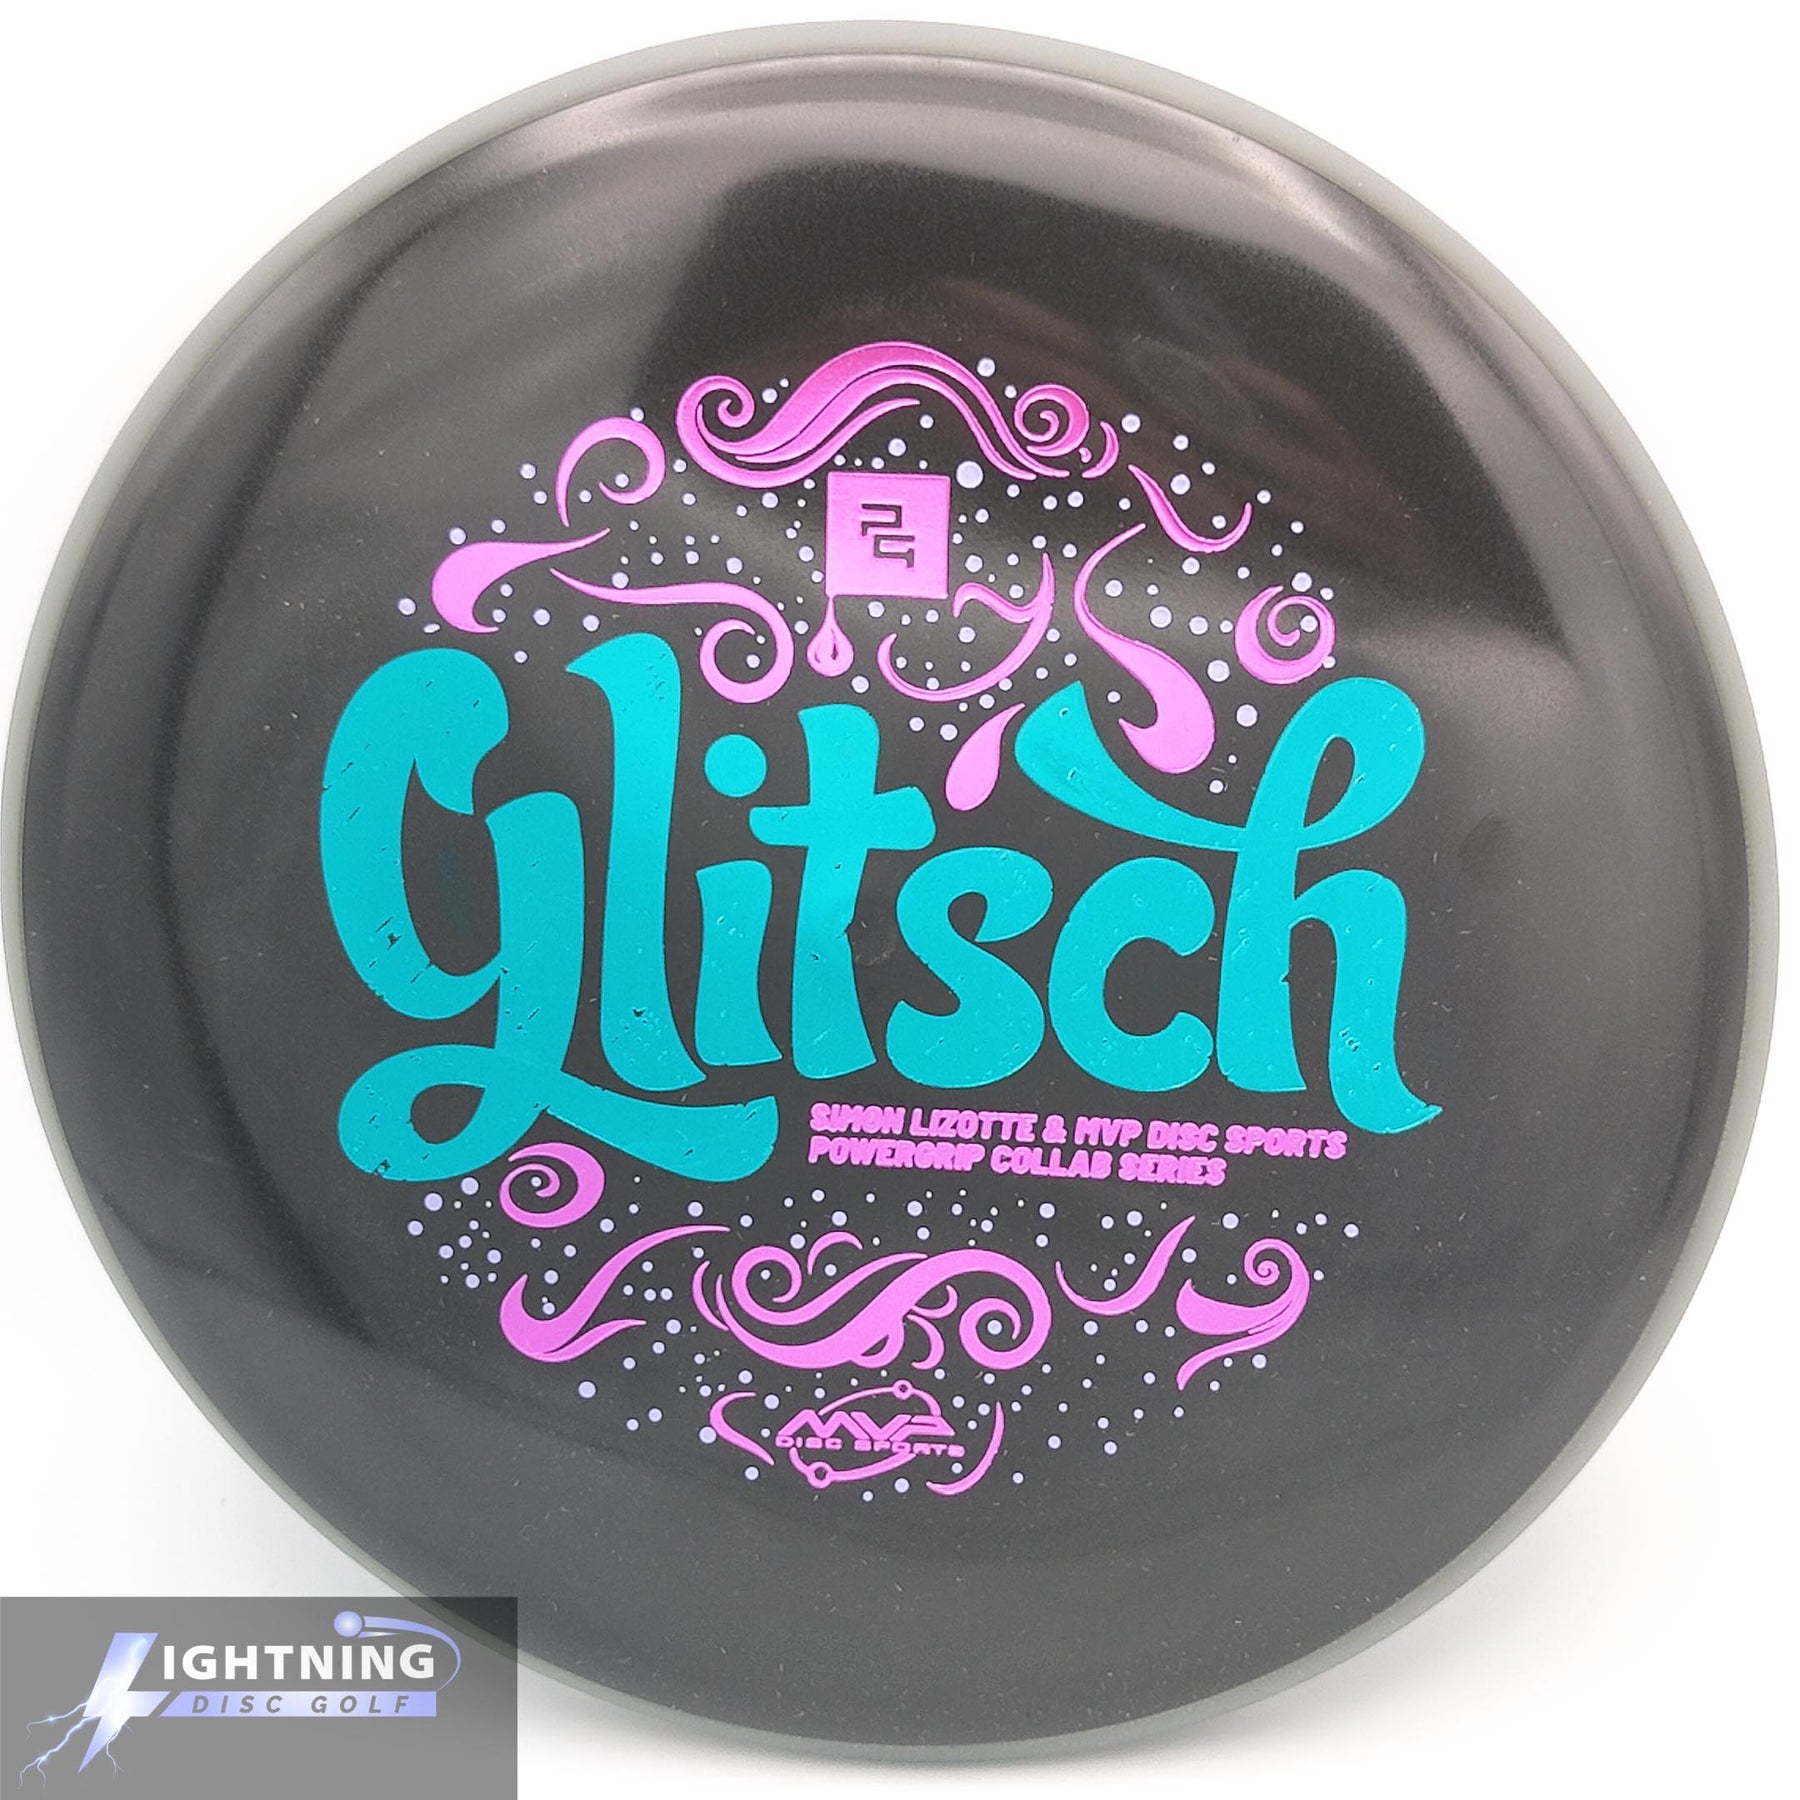 MVP Glitsch - Eclipse Rim Glitch Powergrip Simon Lizotte Collab